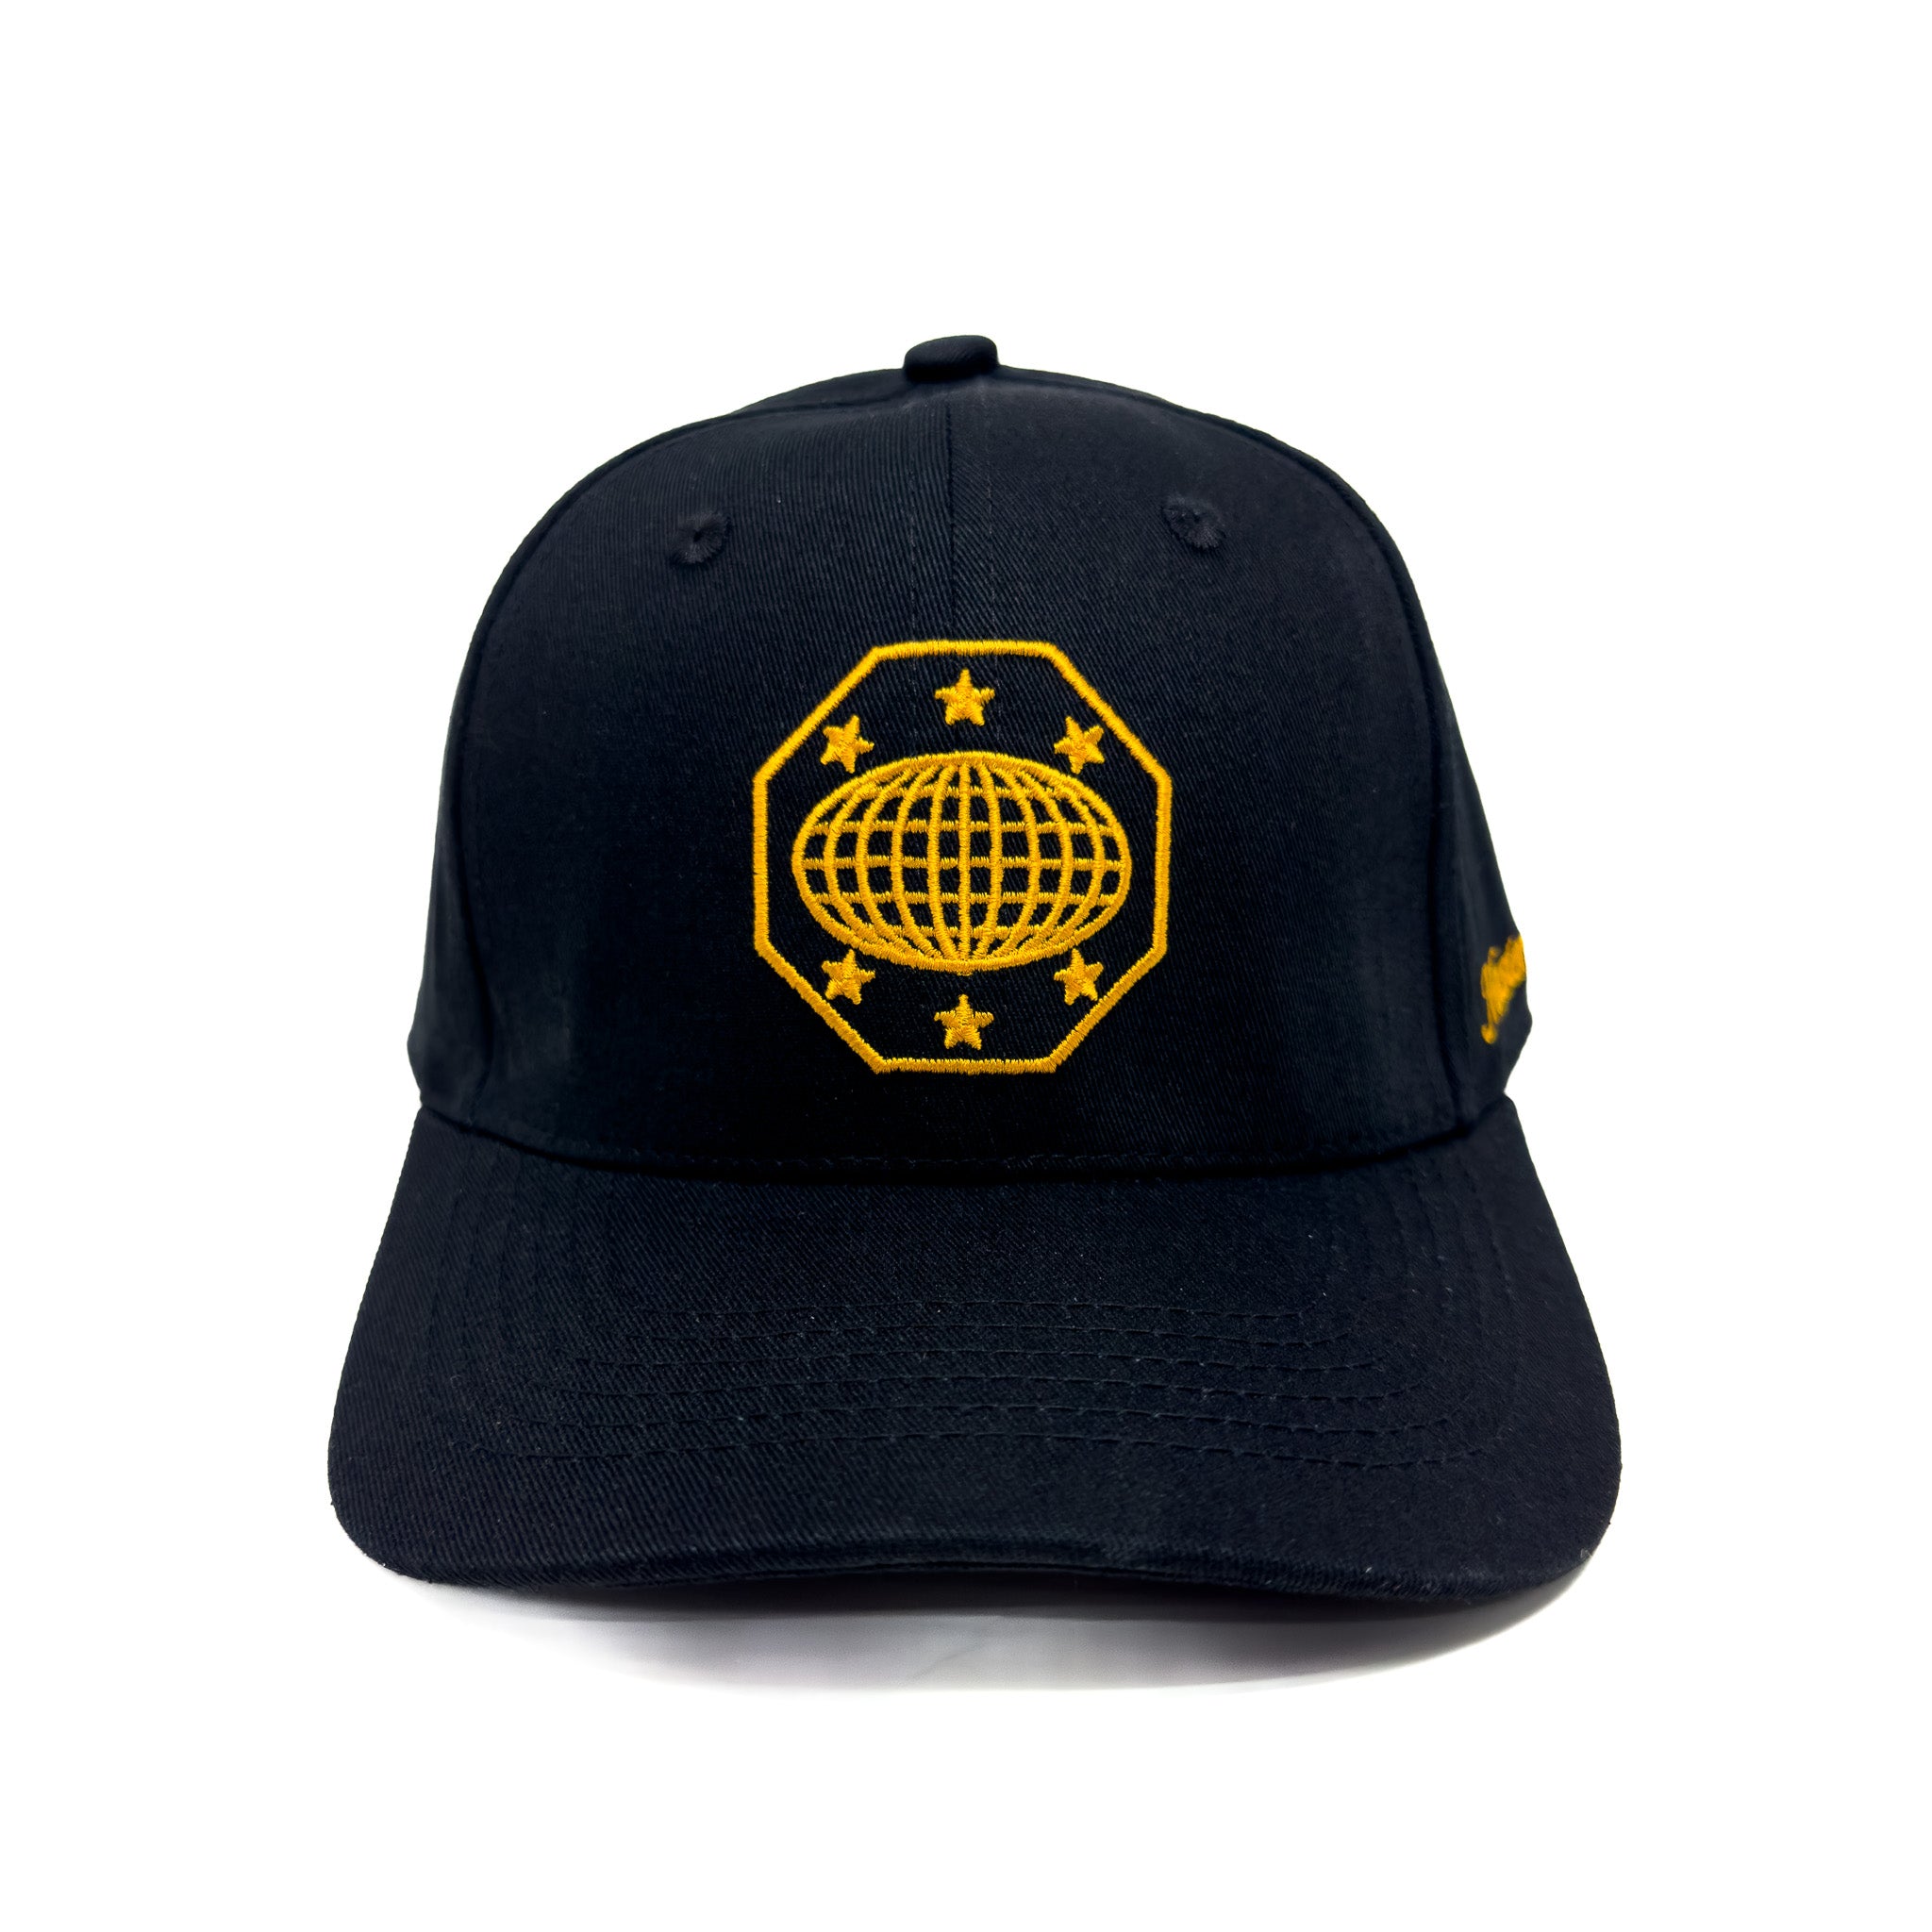 Master Guide Gold Cap (Black)